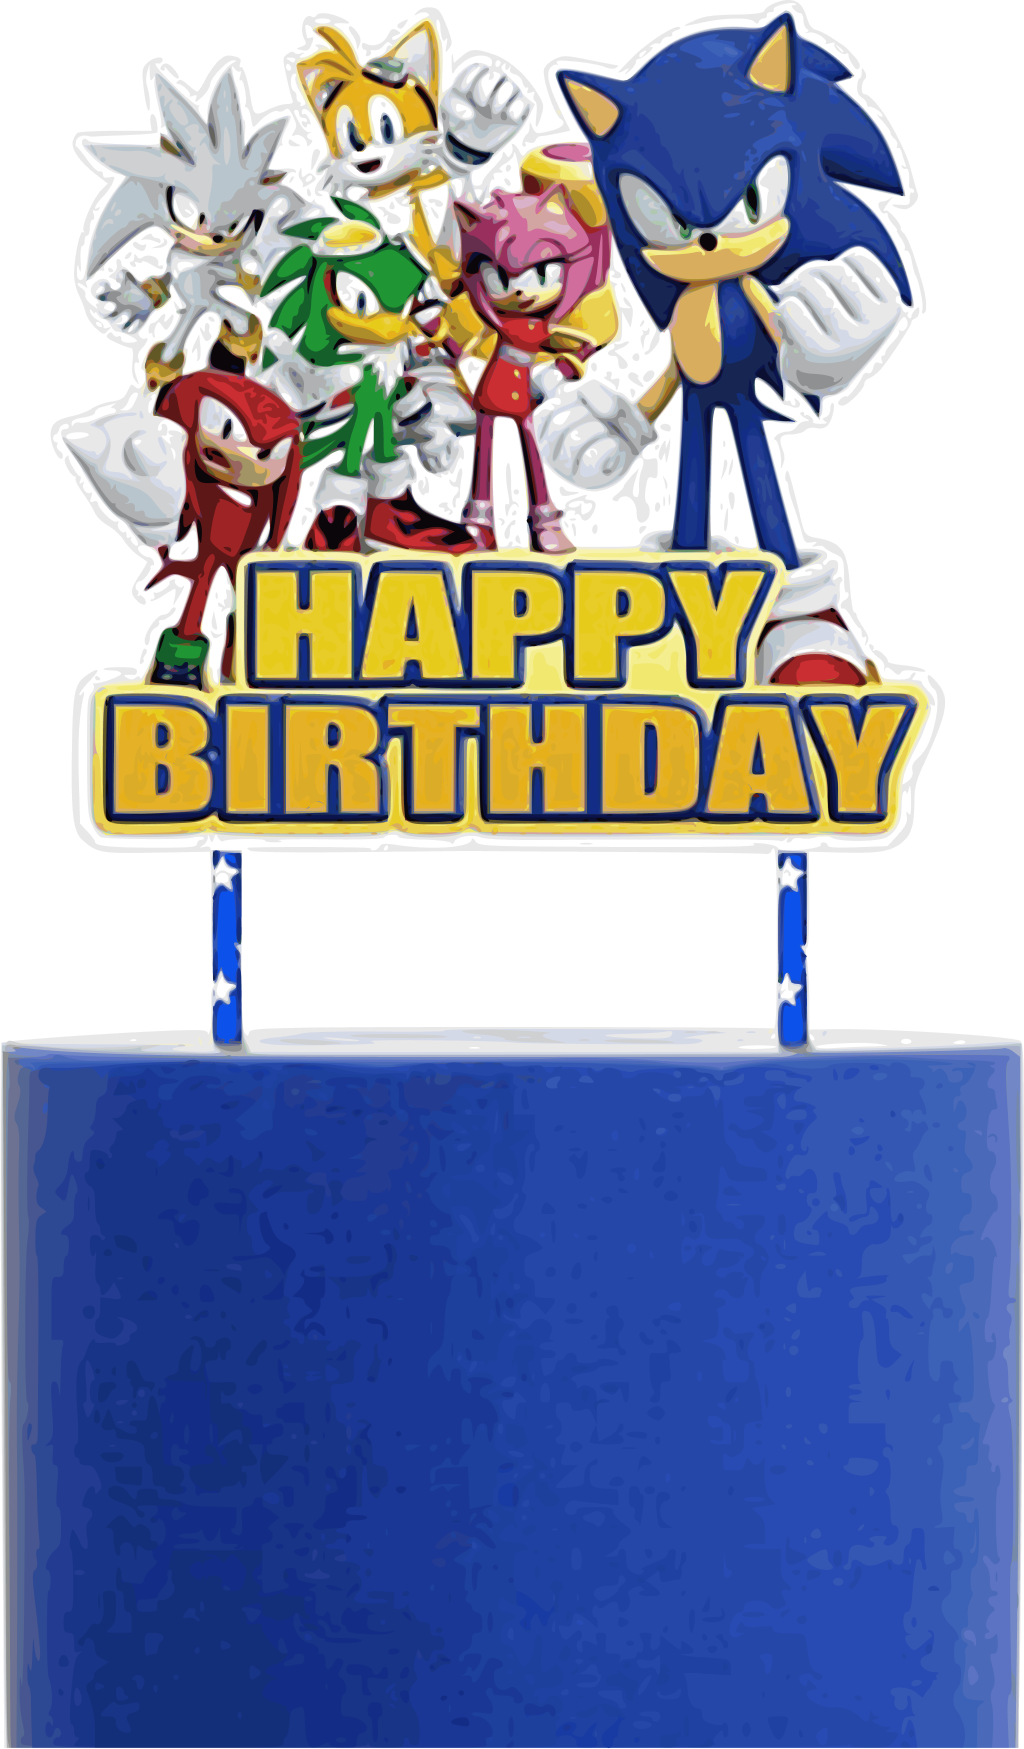 Cartoon image of sonic with the inscription "Happy Birthday".